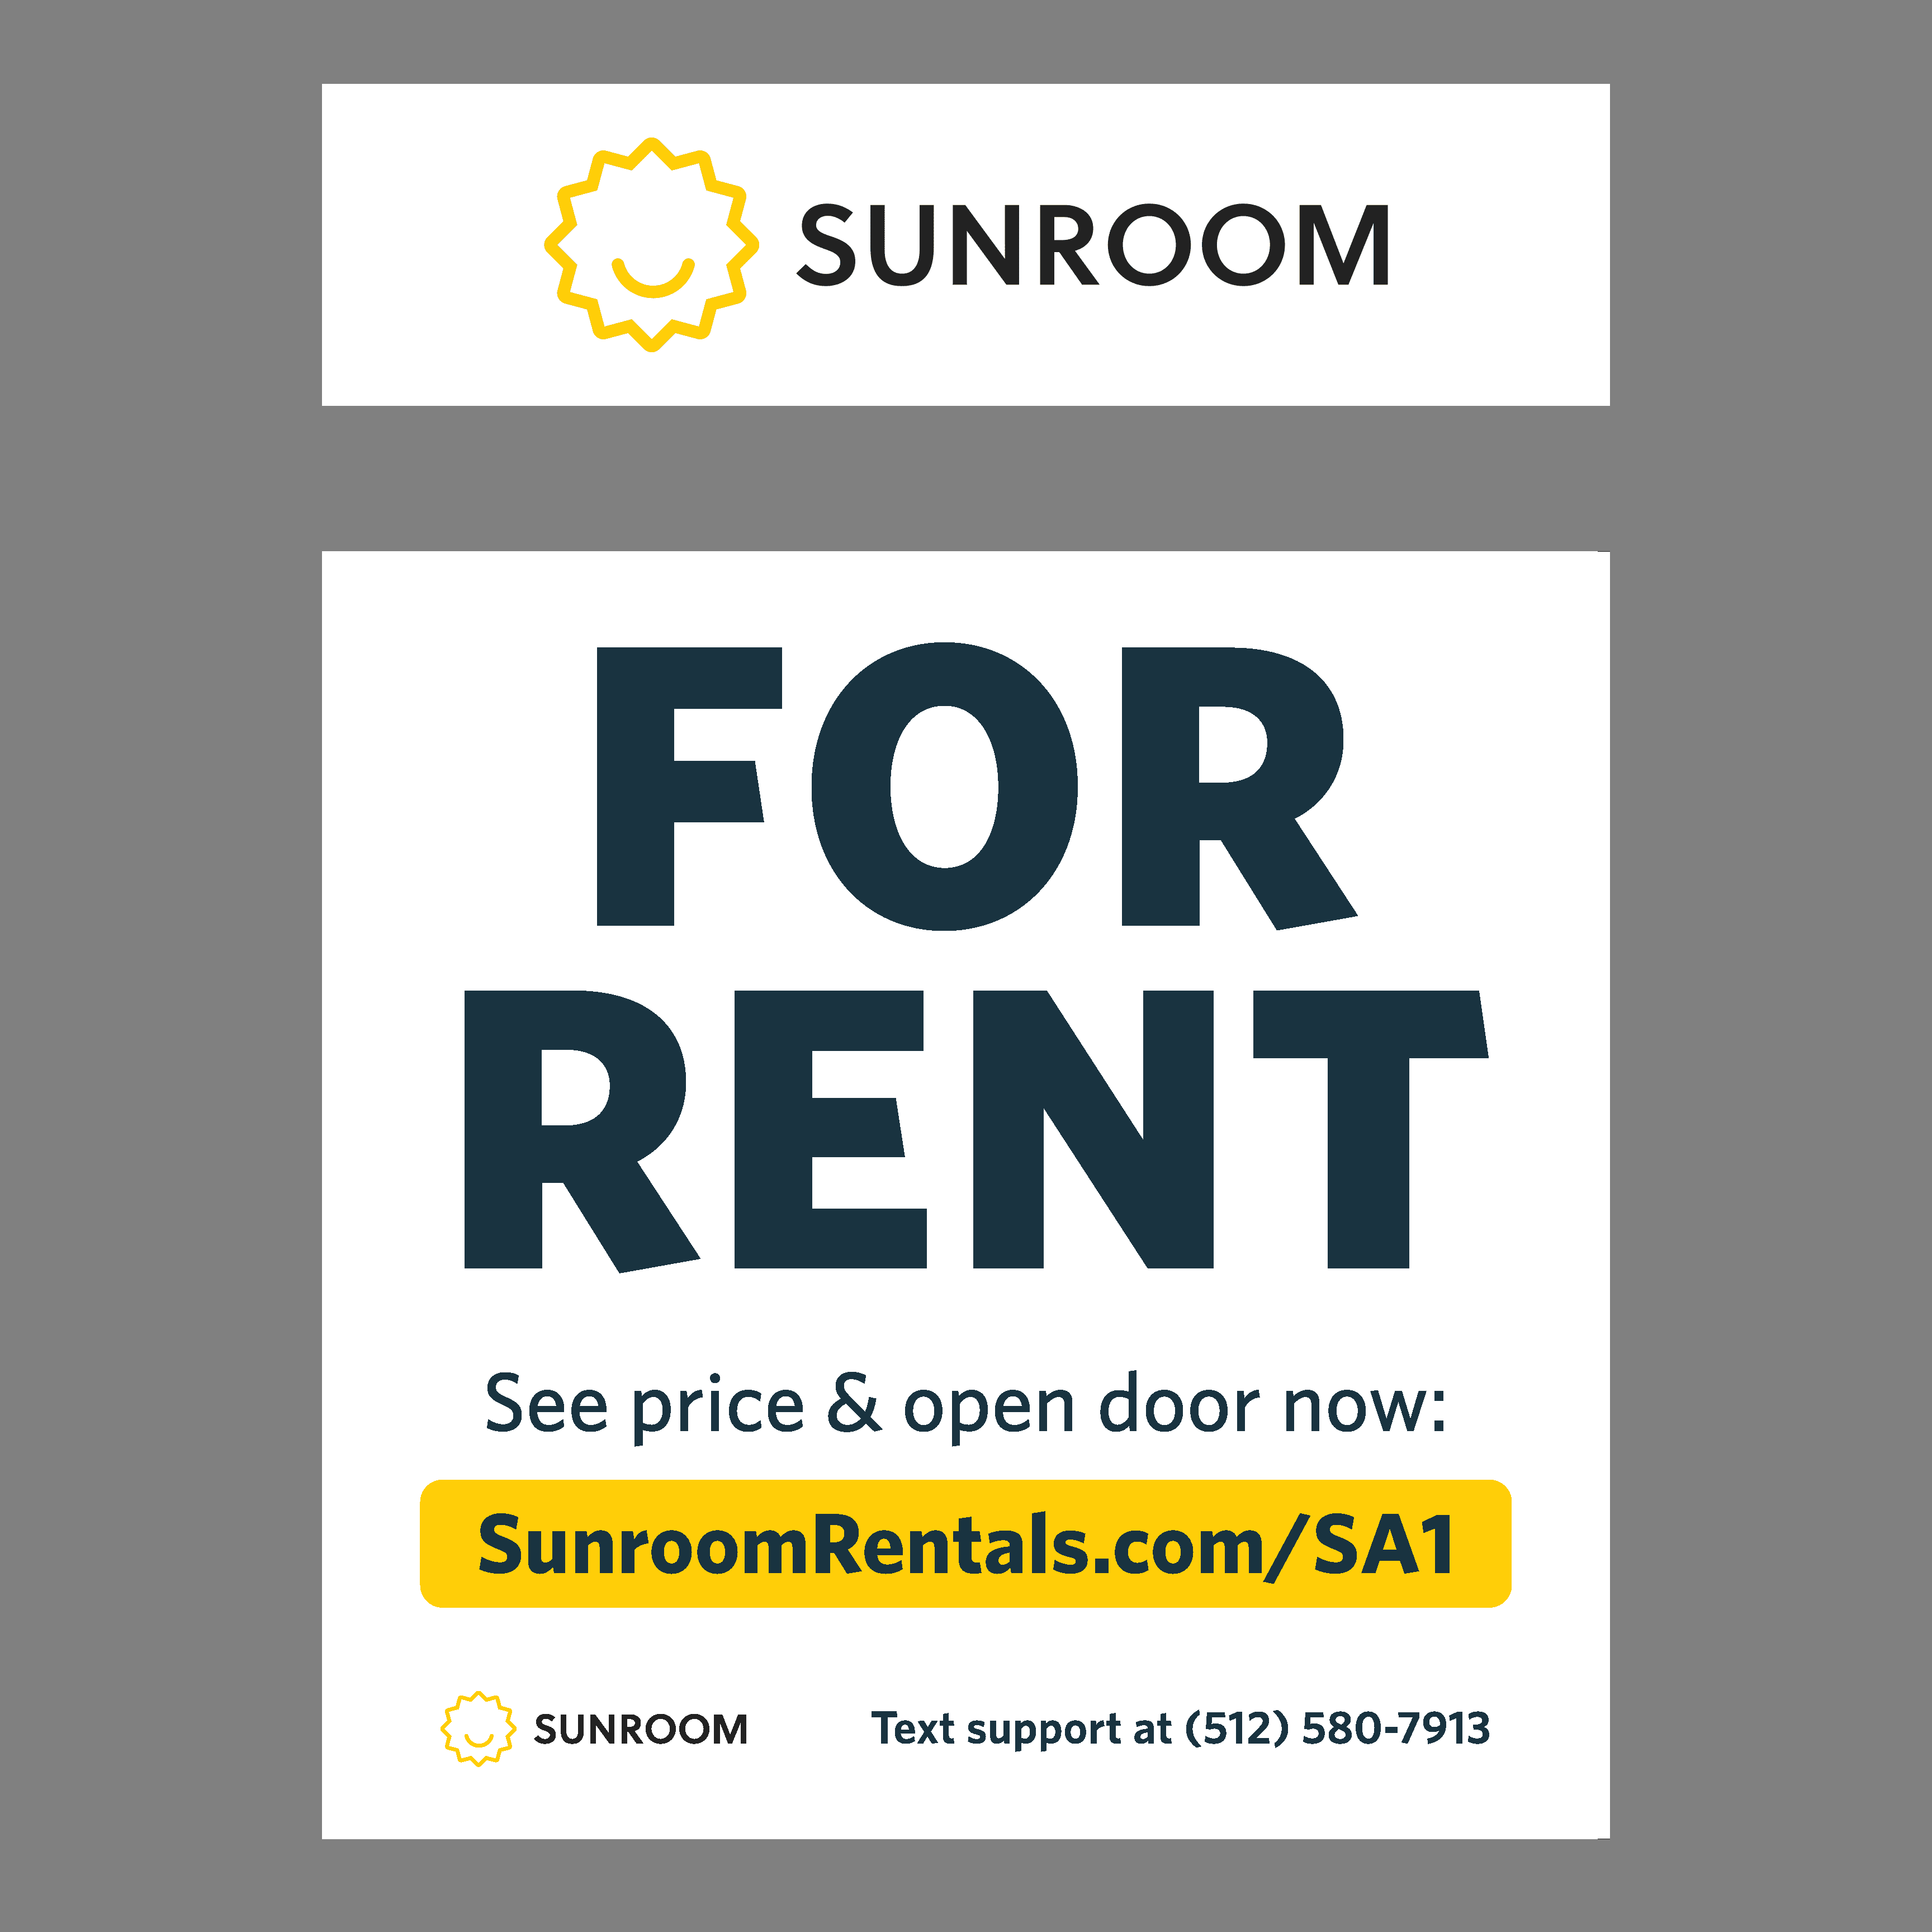 Sunroom Rentals Product Image Sign Set